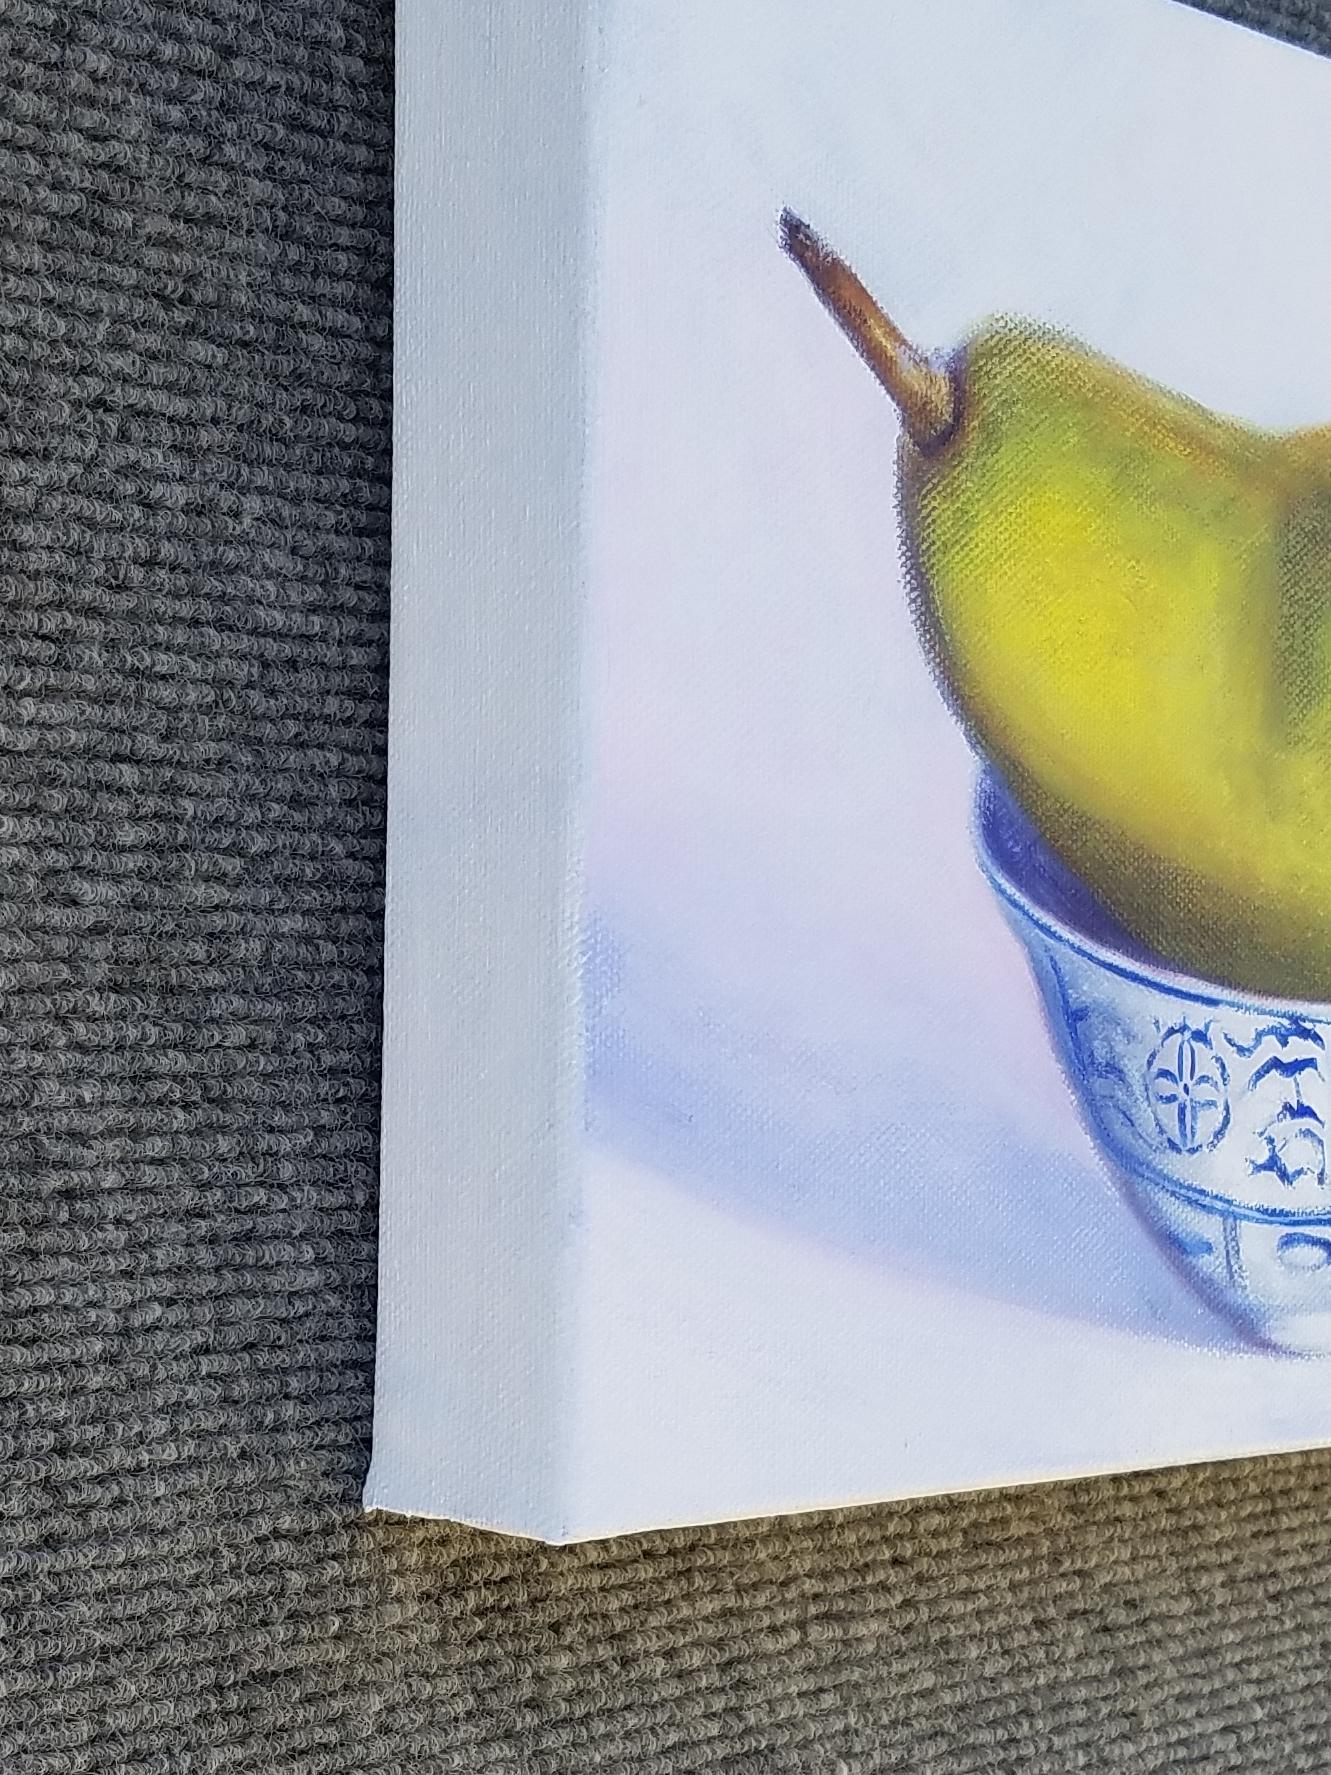 Pear Bowl, #1 - American Realist Art by Tami Cardnella